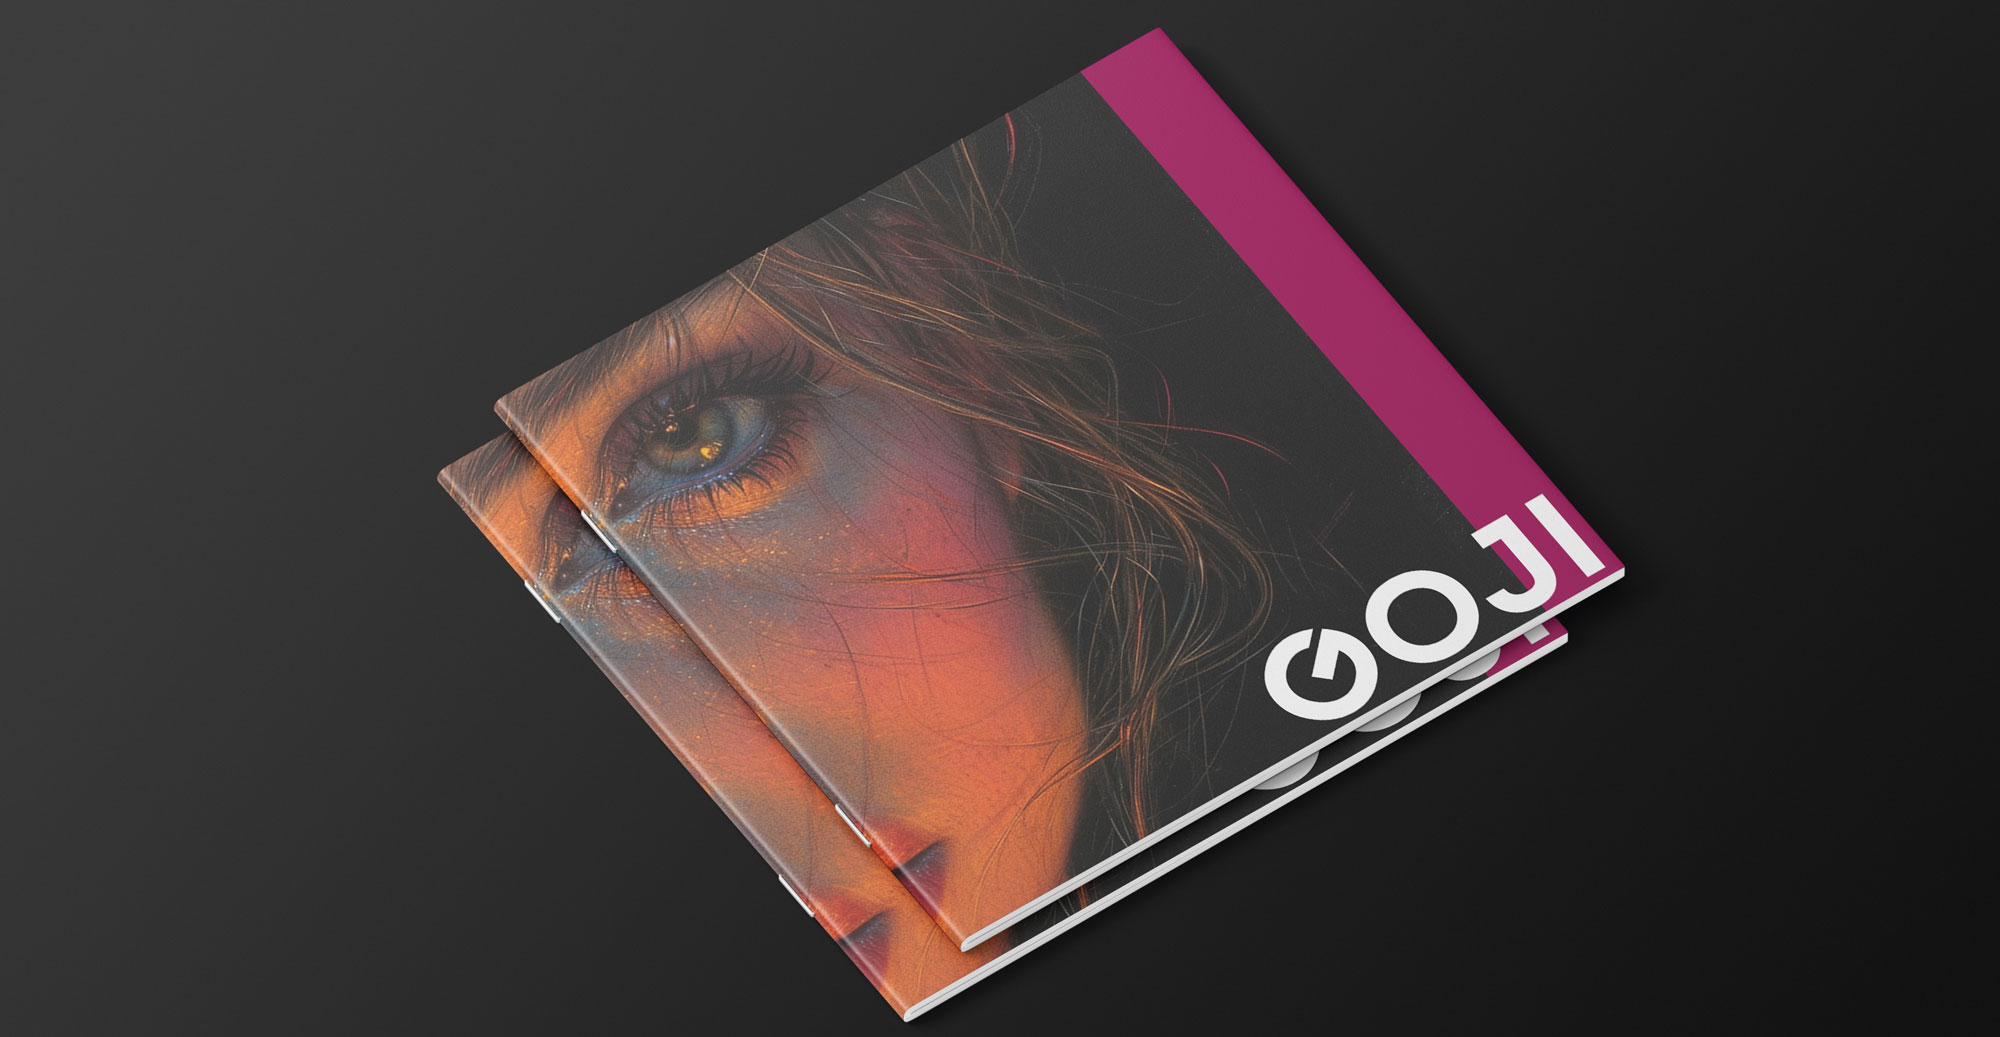 Goji Graphic design example showing book design